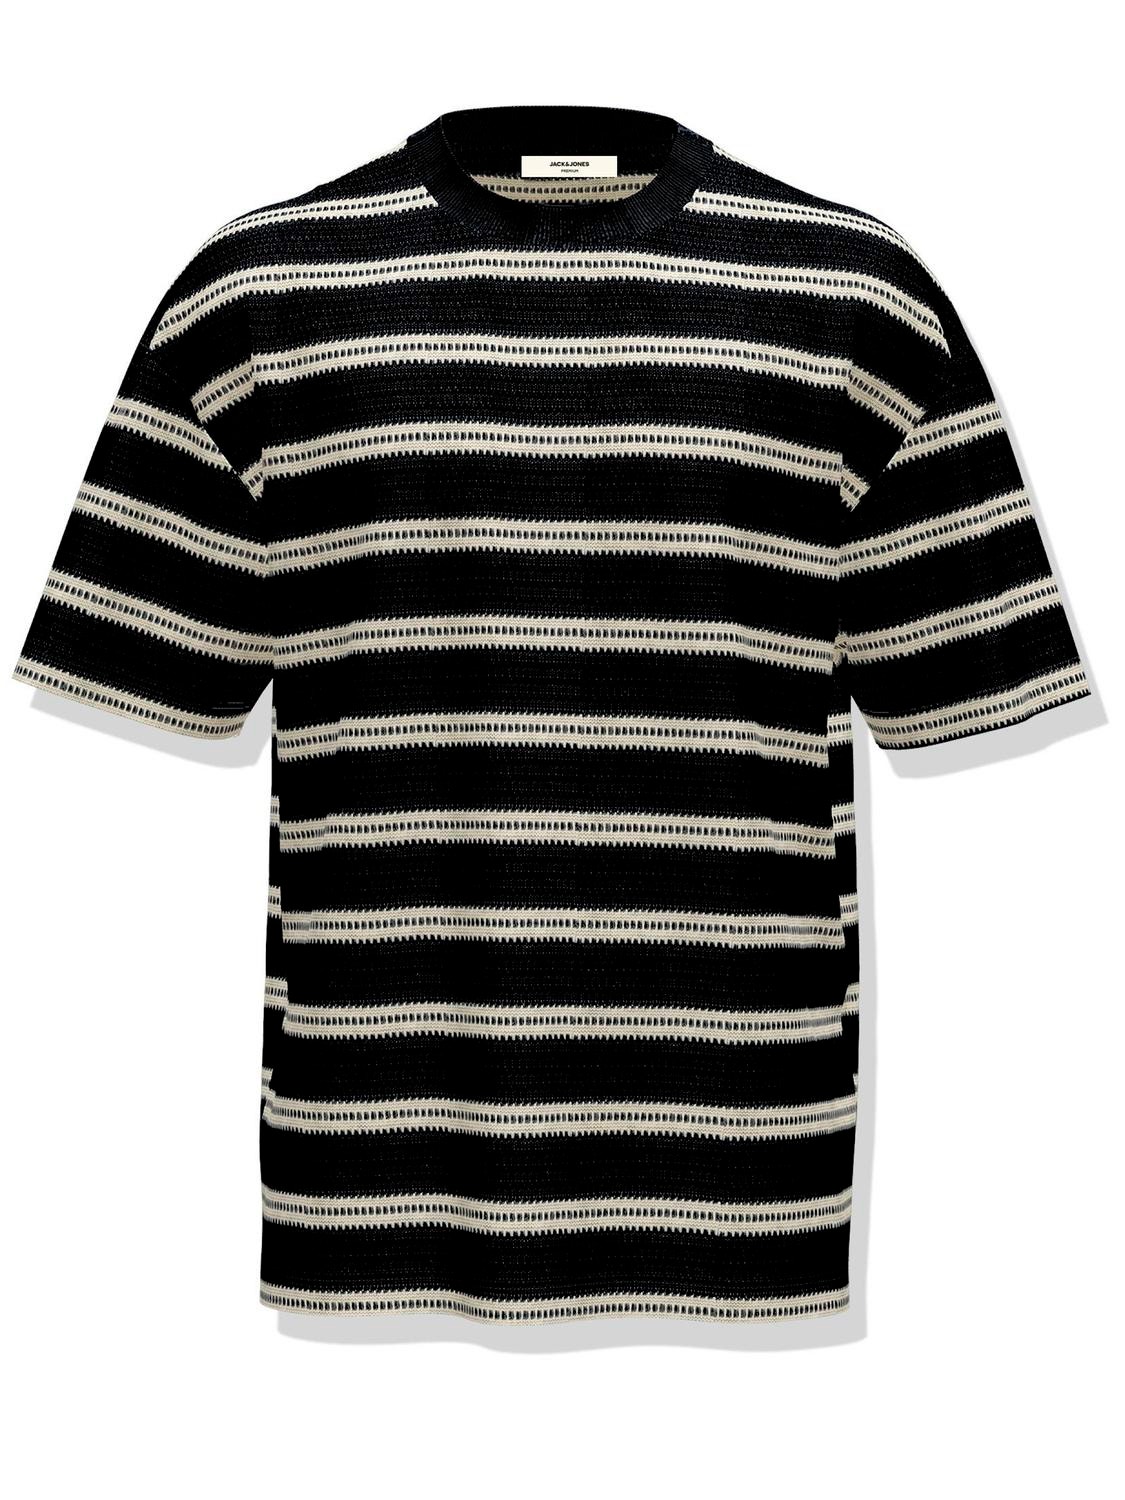 Jack & Jones T-shirt Listrado Decote Redondo -Black - 12240629